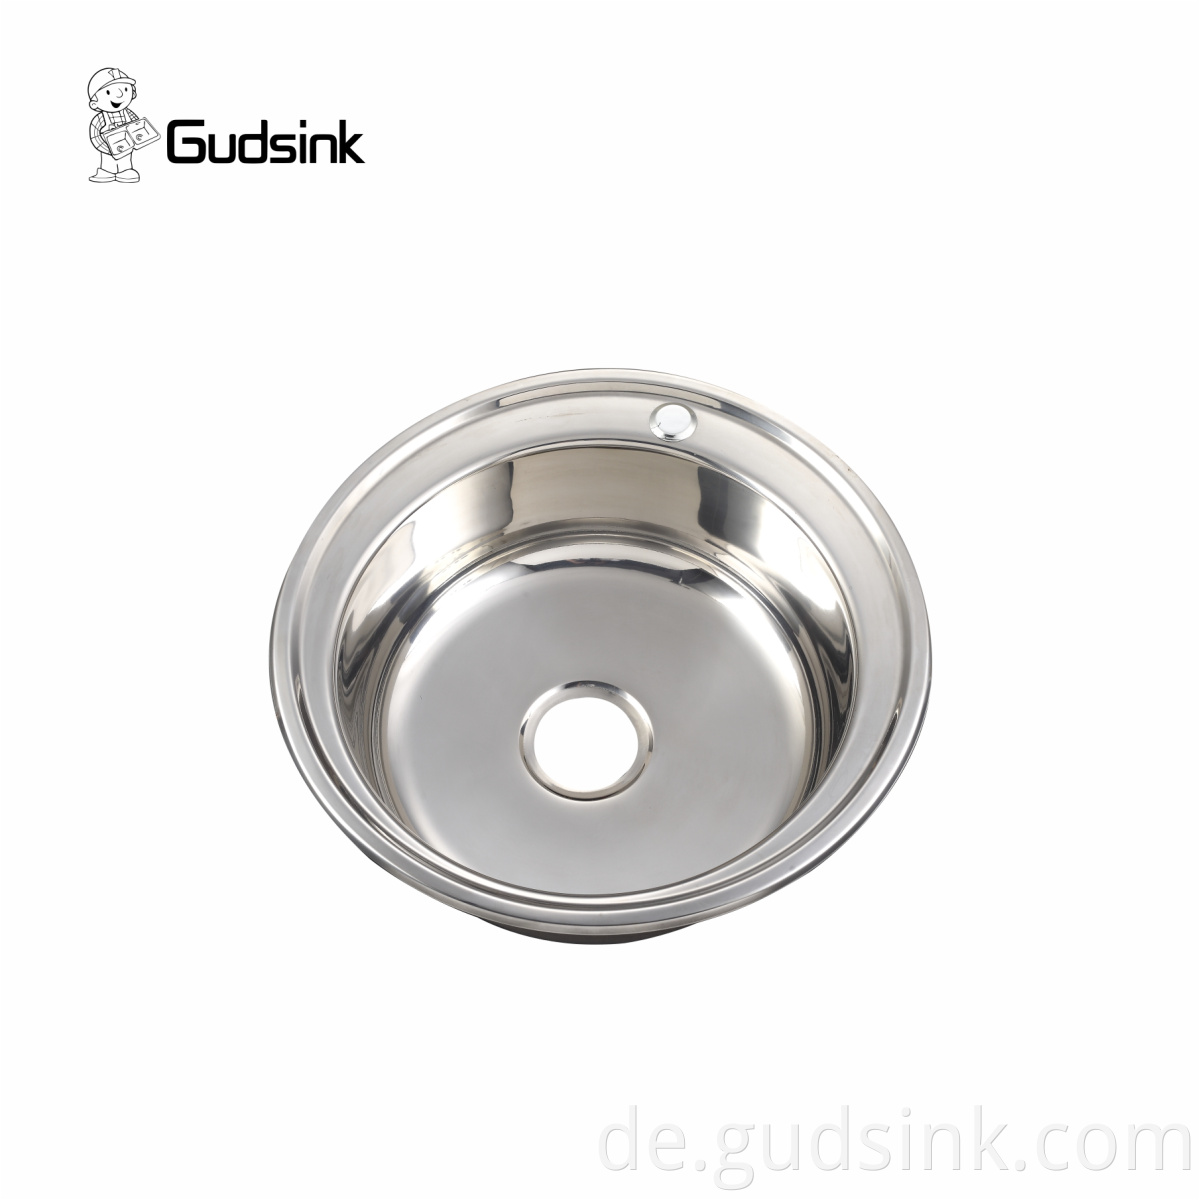 round stainless steel sink